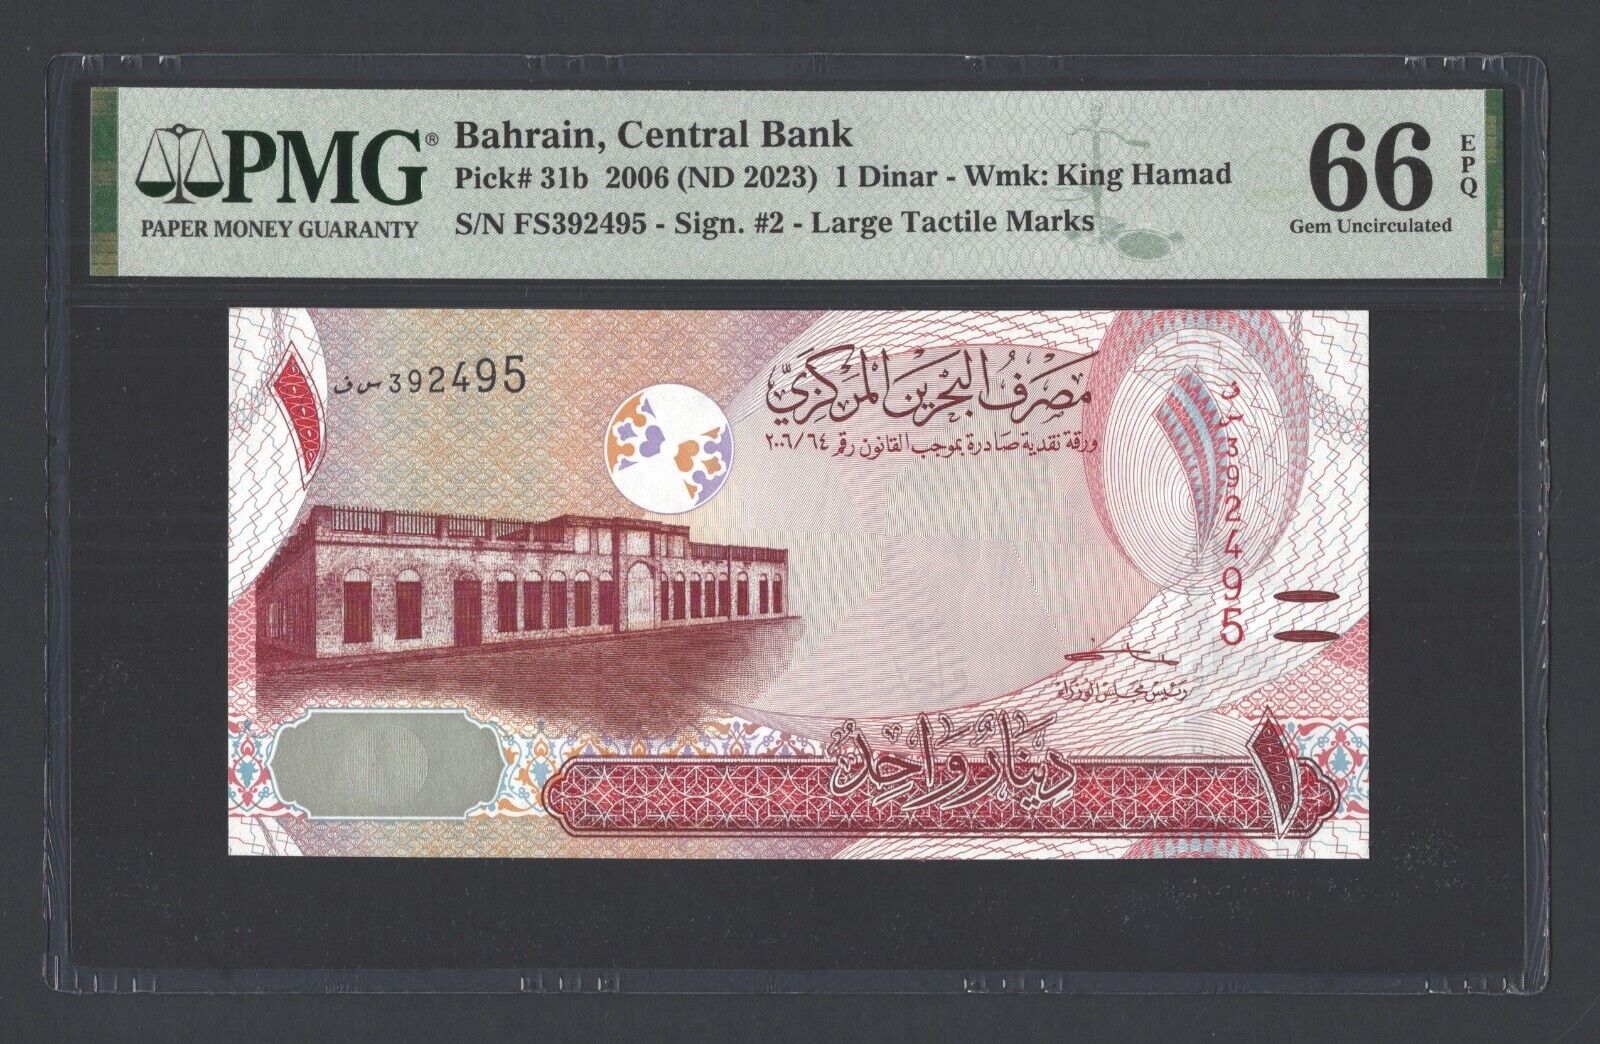 Bahrain One Dinar 2006 (ND 2023) P31b Uncirculated Grade 66